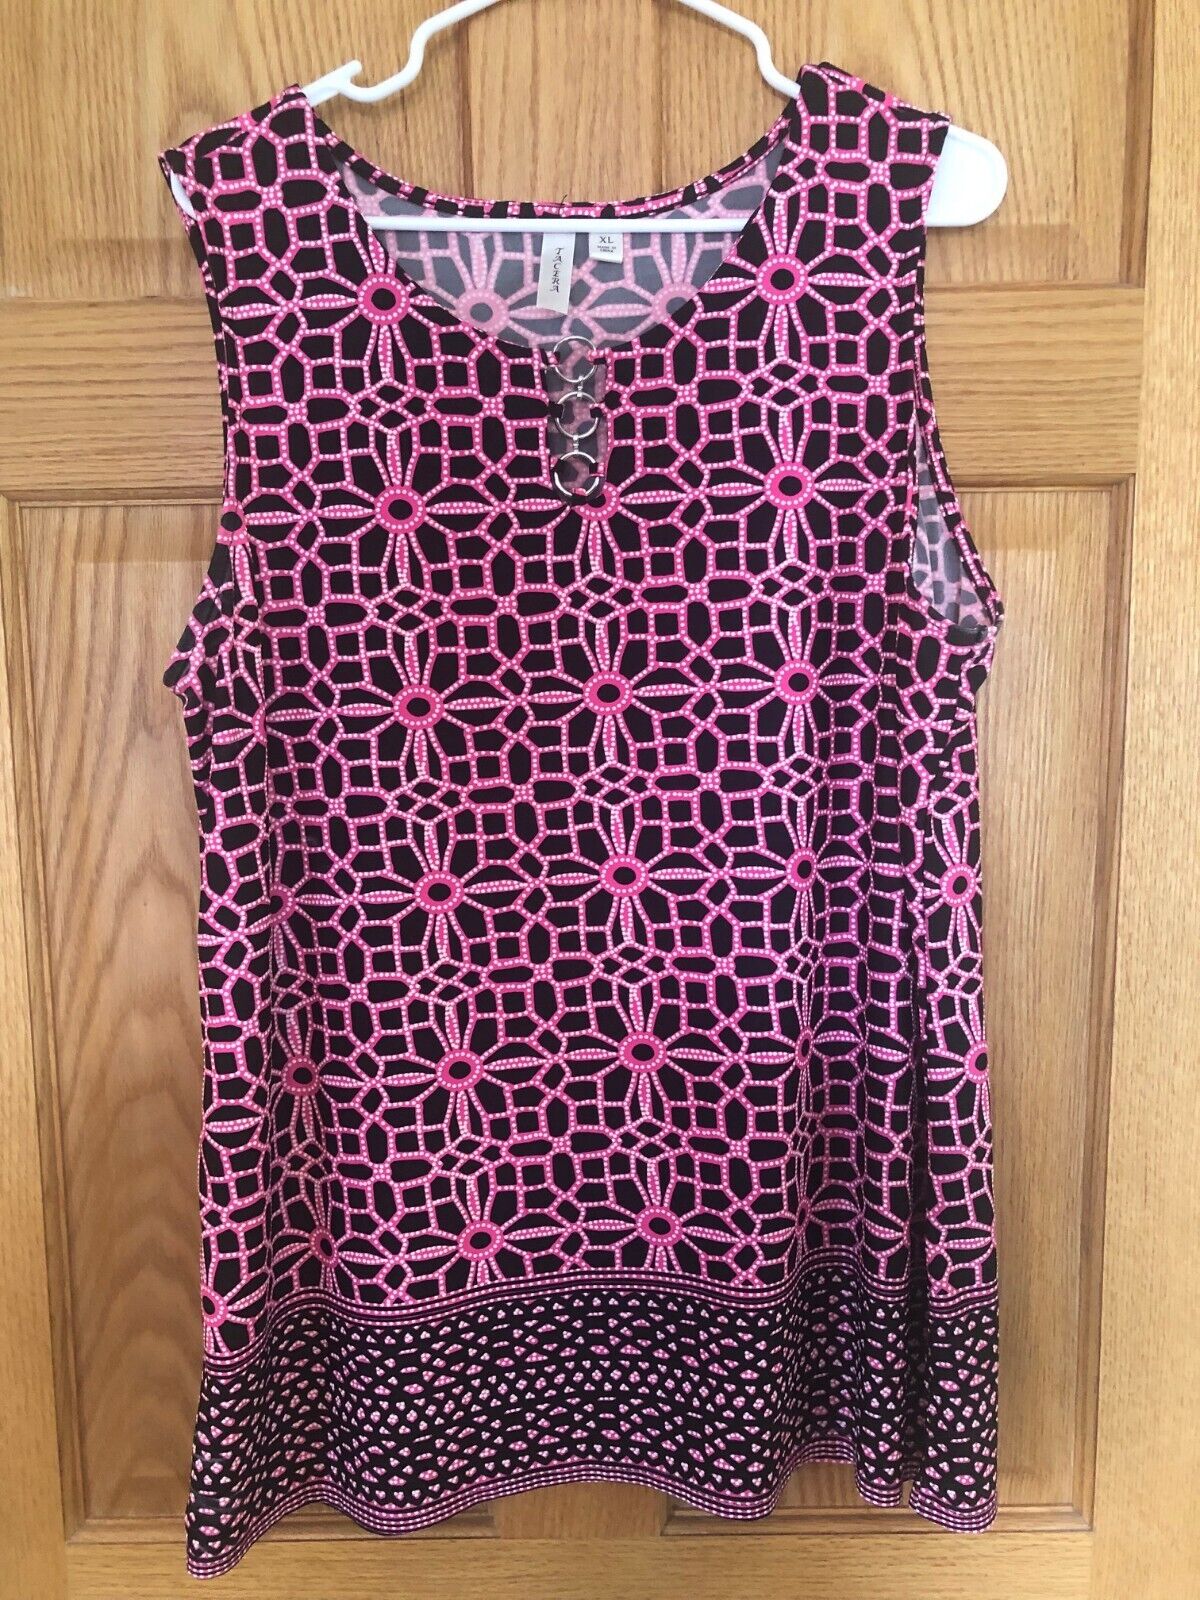 Tacera Sleeveless Blouse XL Pink/Black worn 1 times  Very Dressy,  nice material